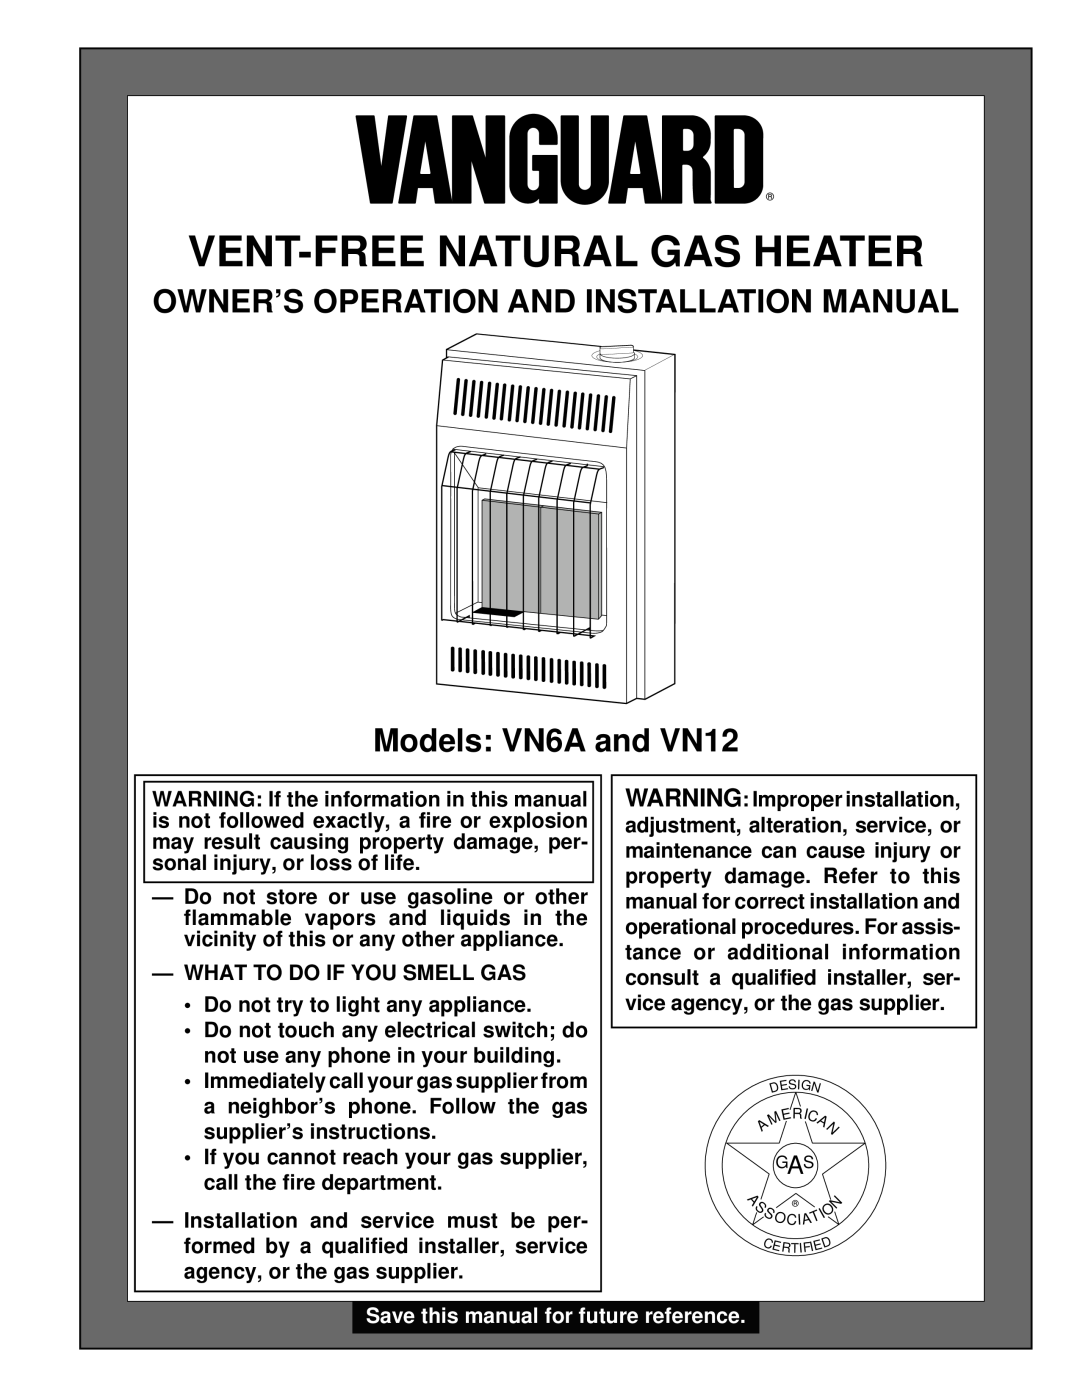 Vanguard Heating installation manual Owner’S Operation And Installation Manual, Models VN6A and VN12 